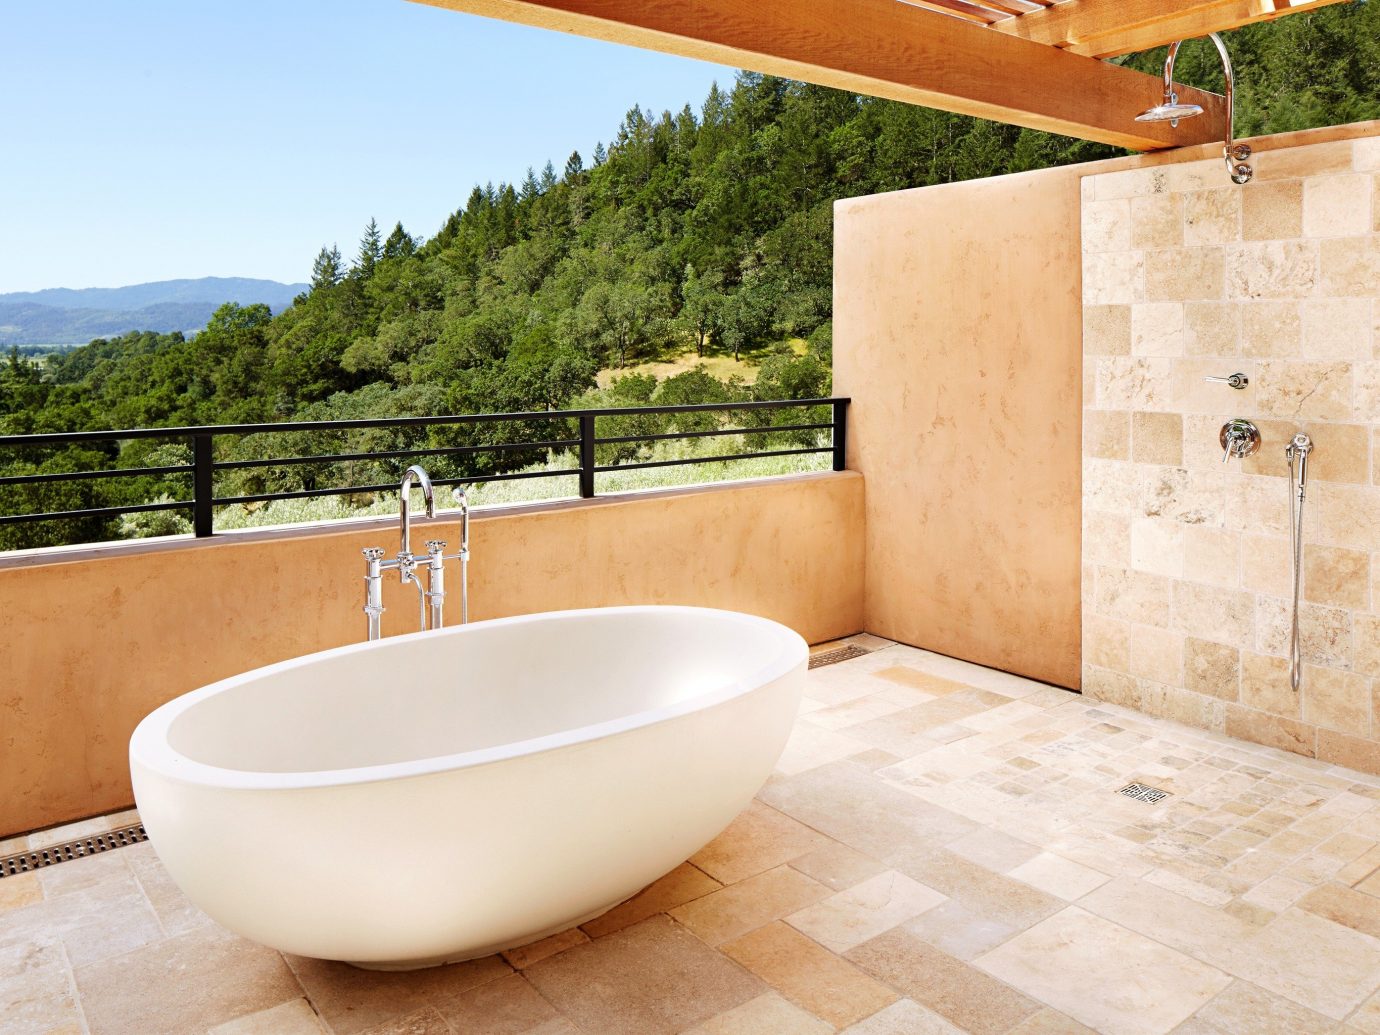 Hotels Offbeat room property swimming pool bathtub plumbing fixture floor bidet bathroom estate flooring sink tub stone